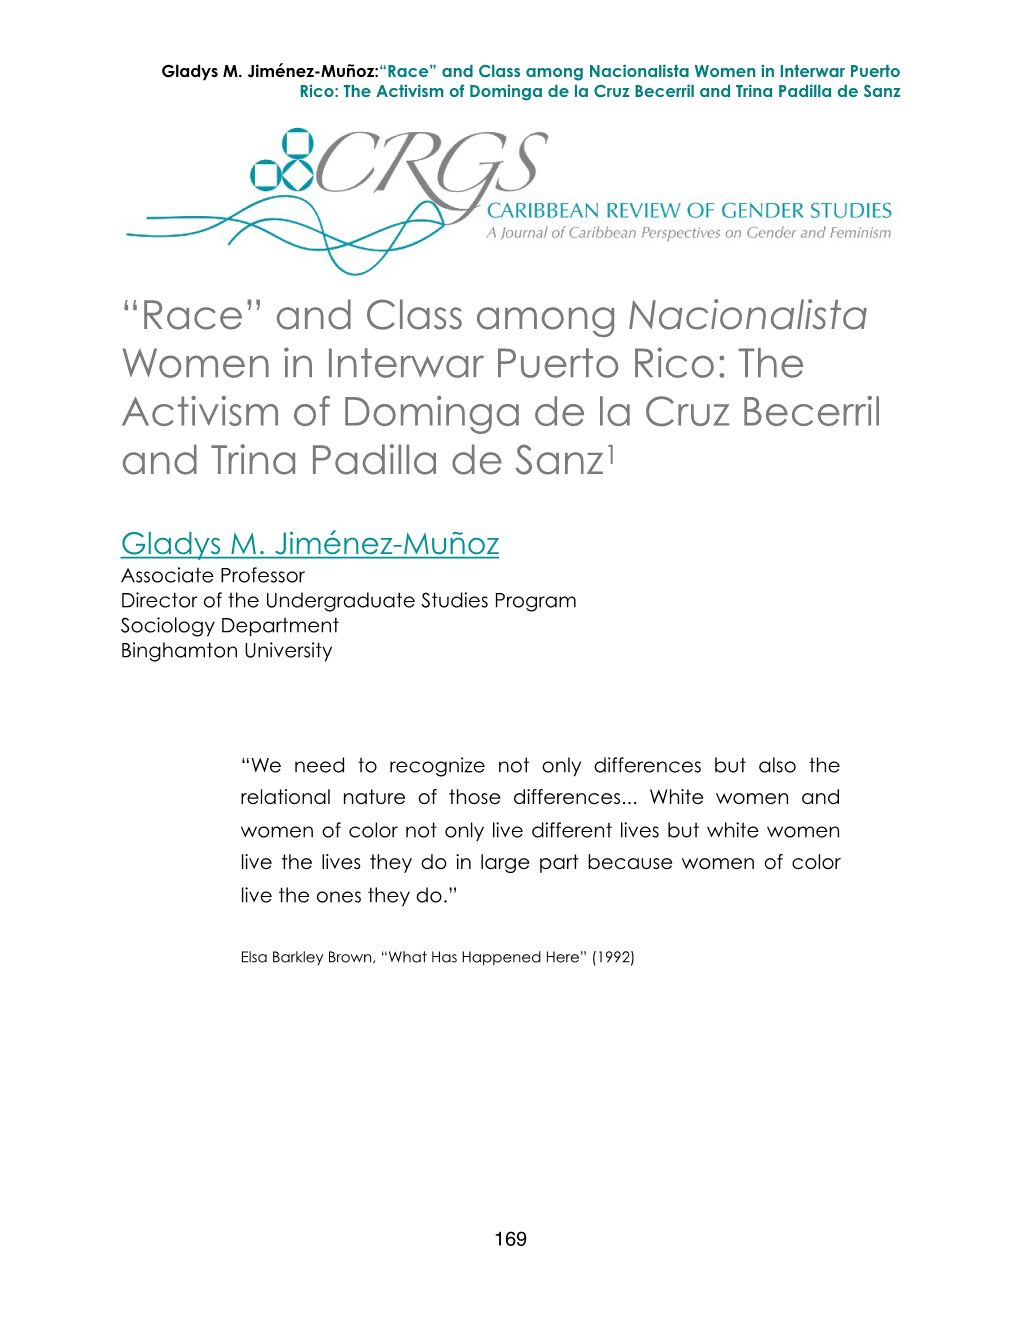 “Race” and Class Among Nacionalista Women in Interwar Puerto Rico: the Activism of Dominga De La Cruz Becerril and Trina Padilla De Sanz